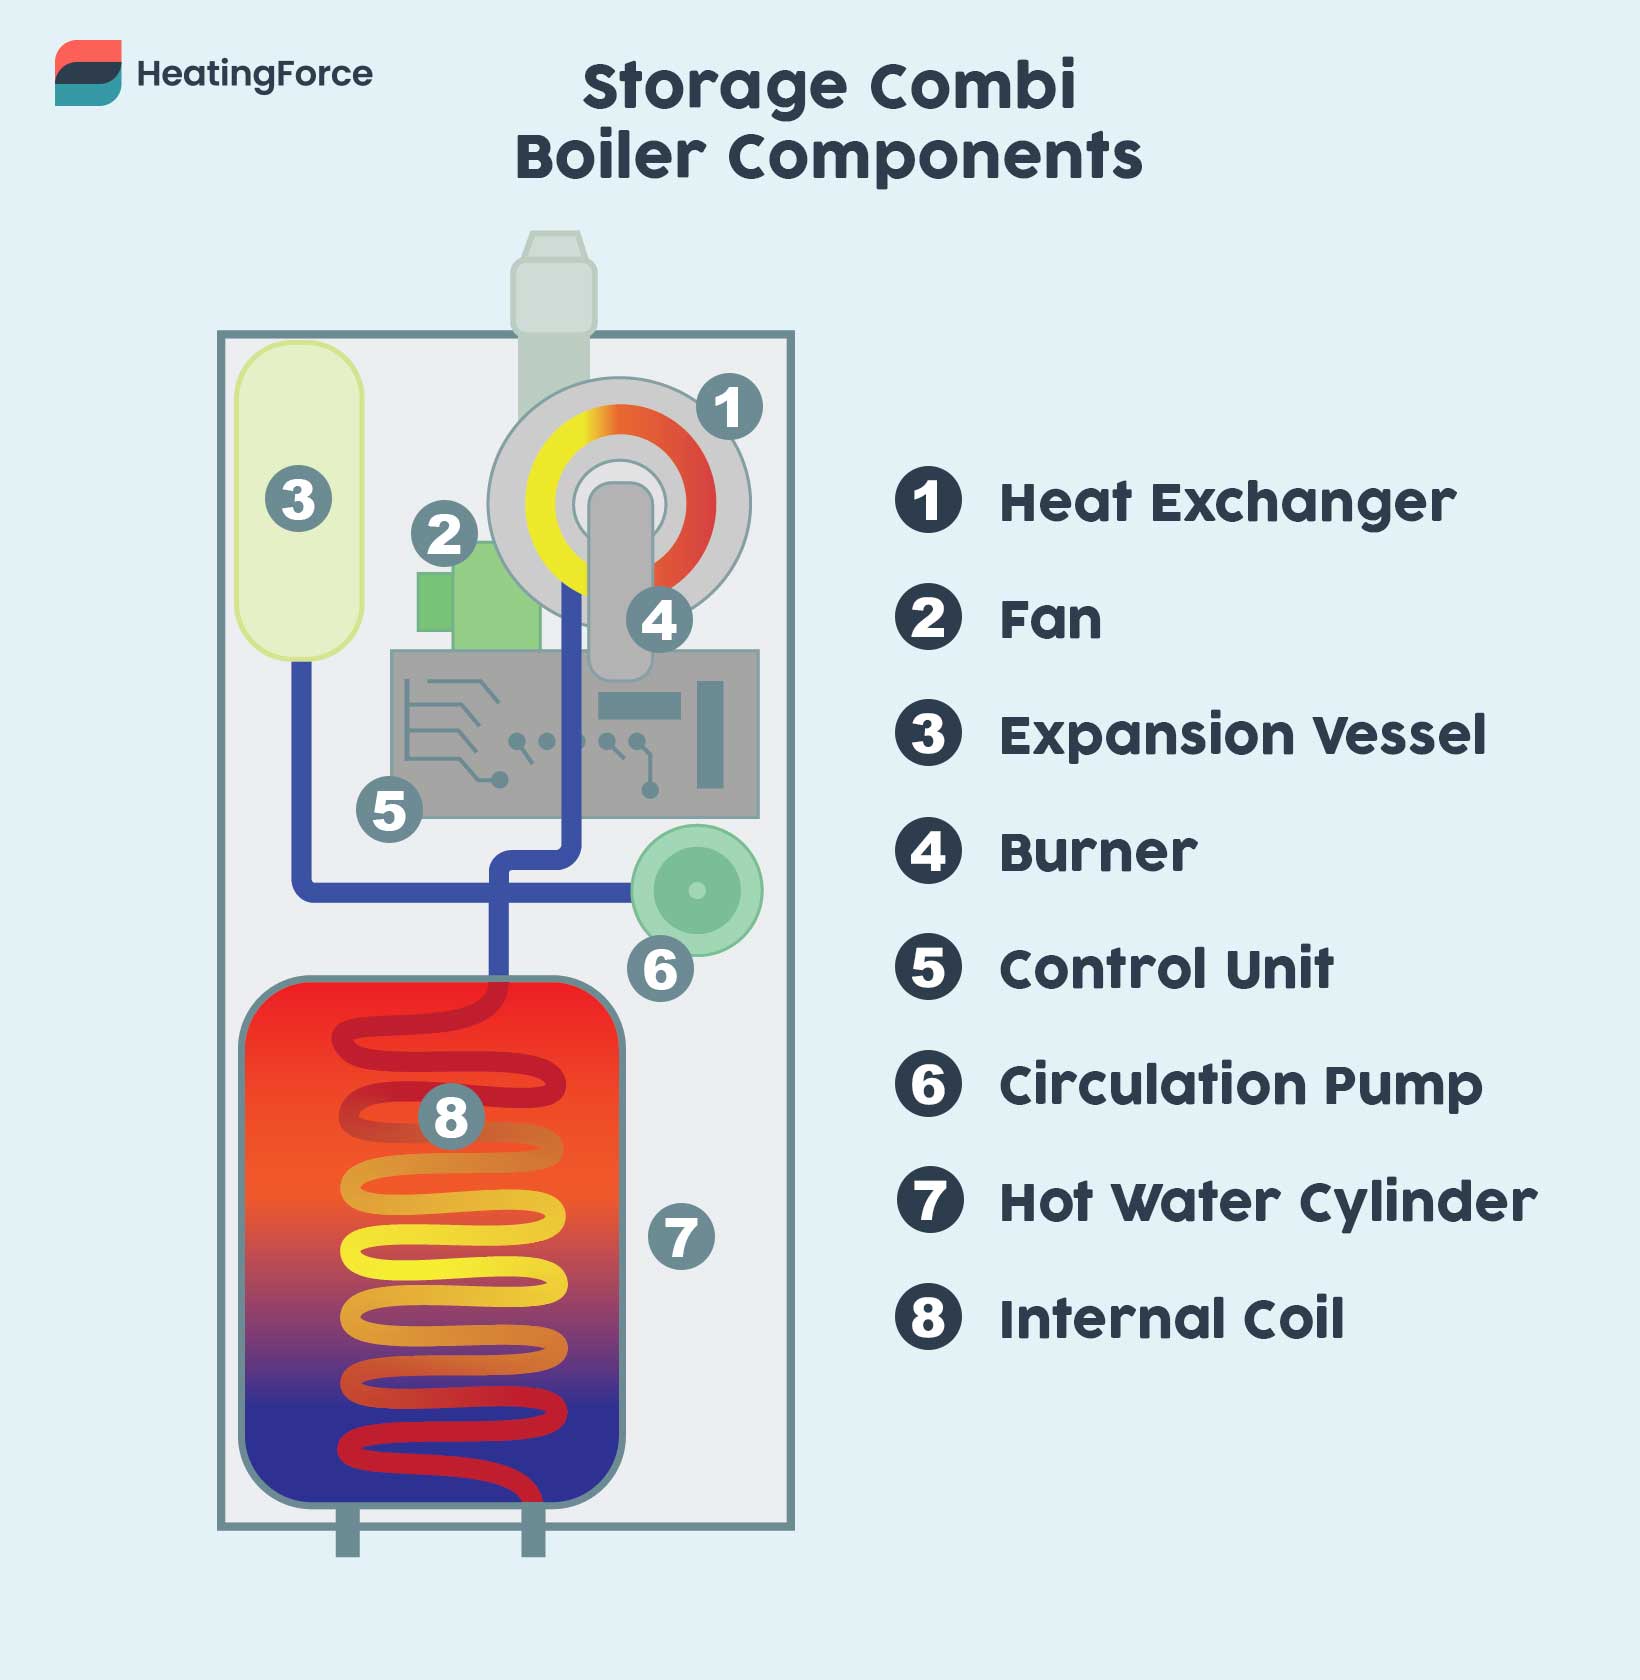 Storage combi boiler components